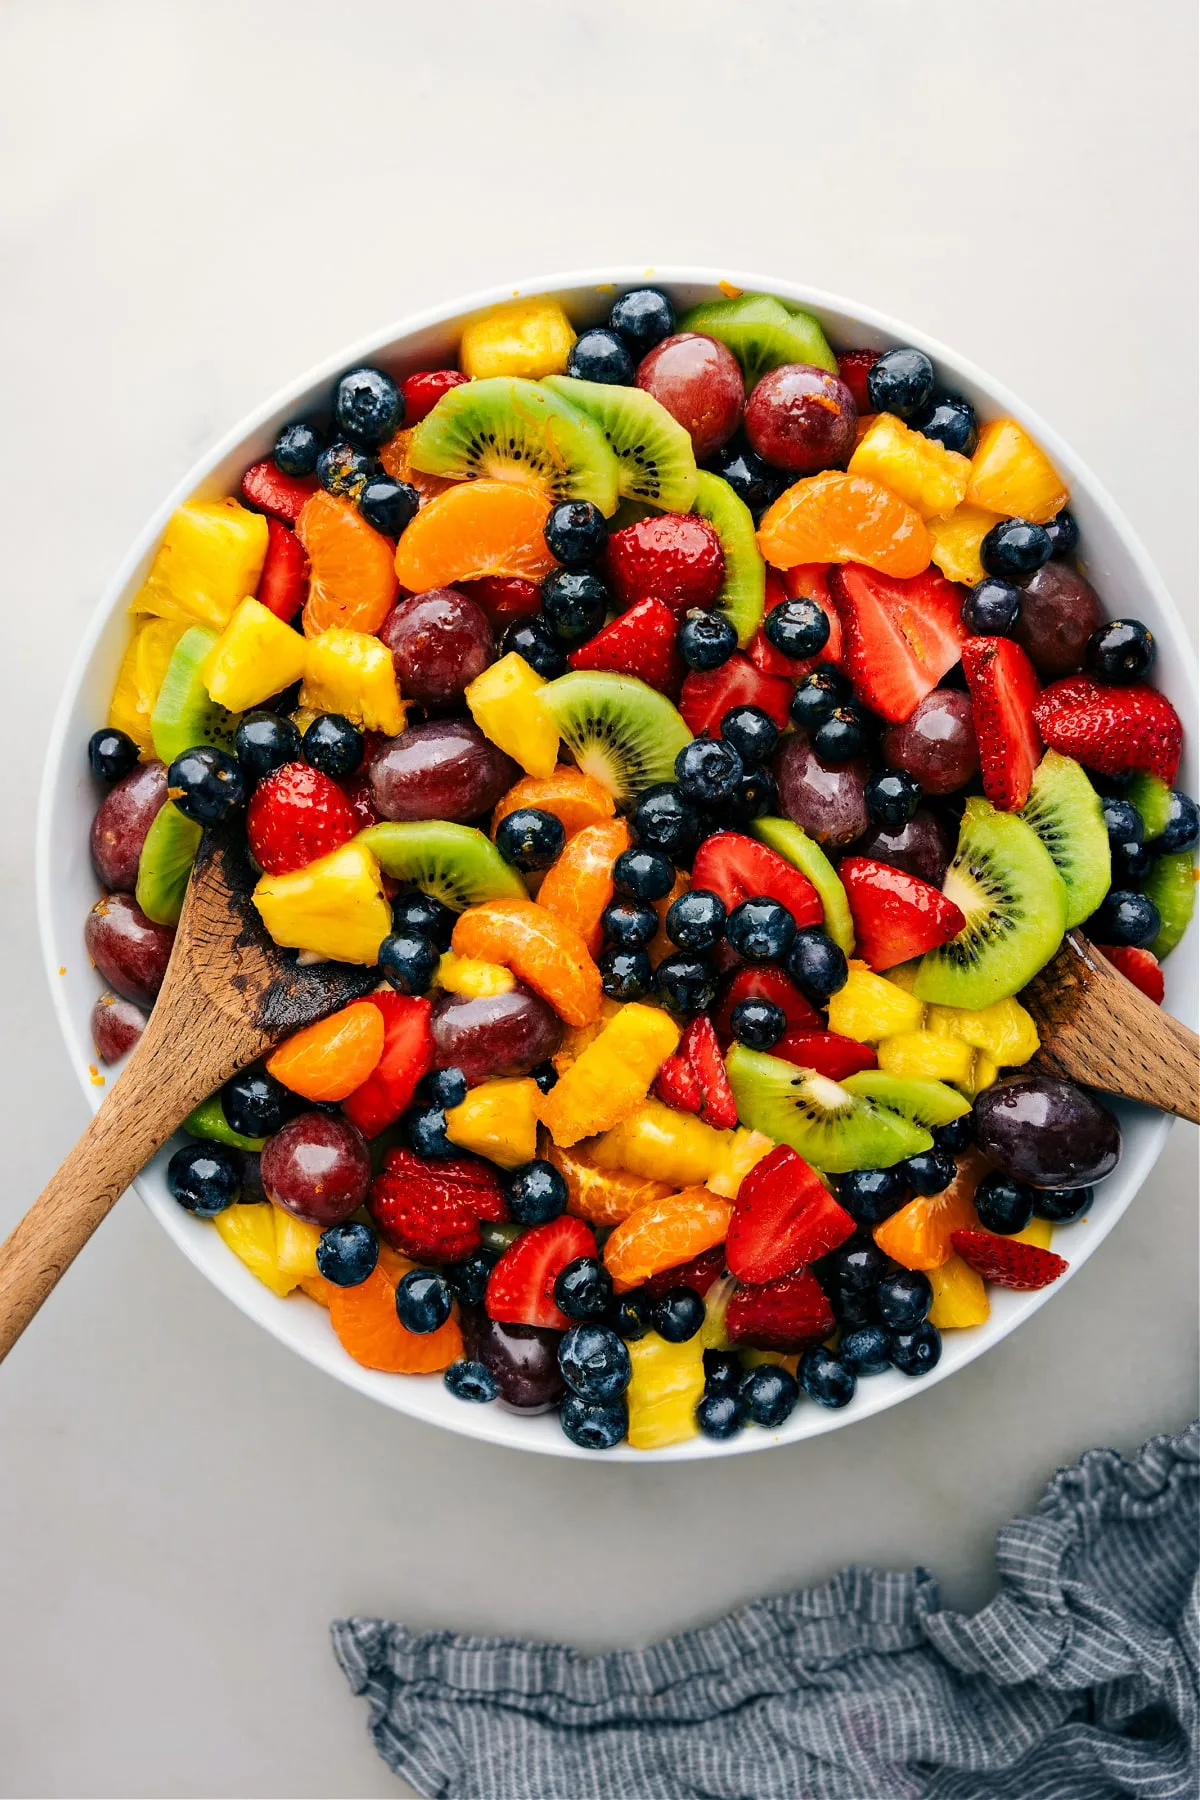 My Favorite Fruit Salad